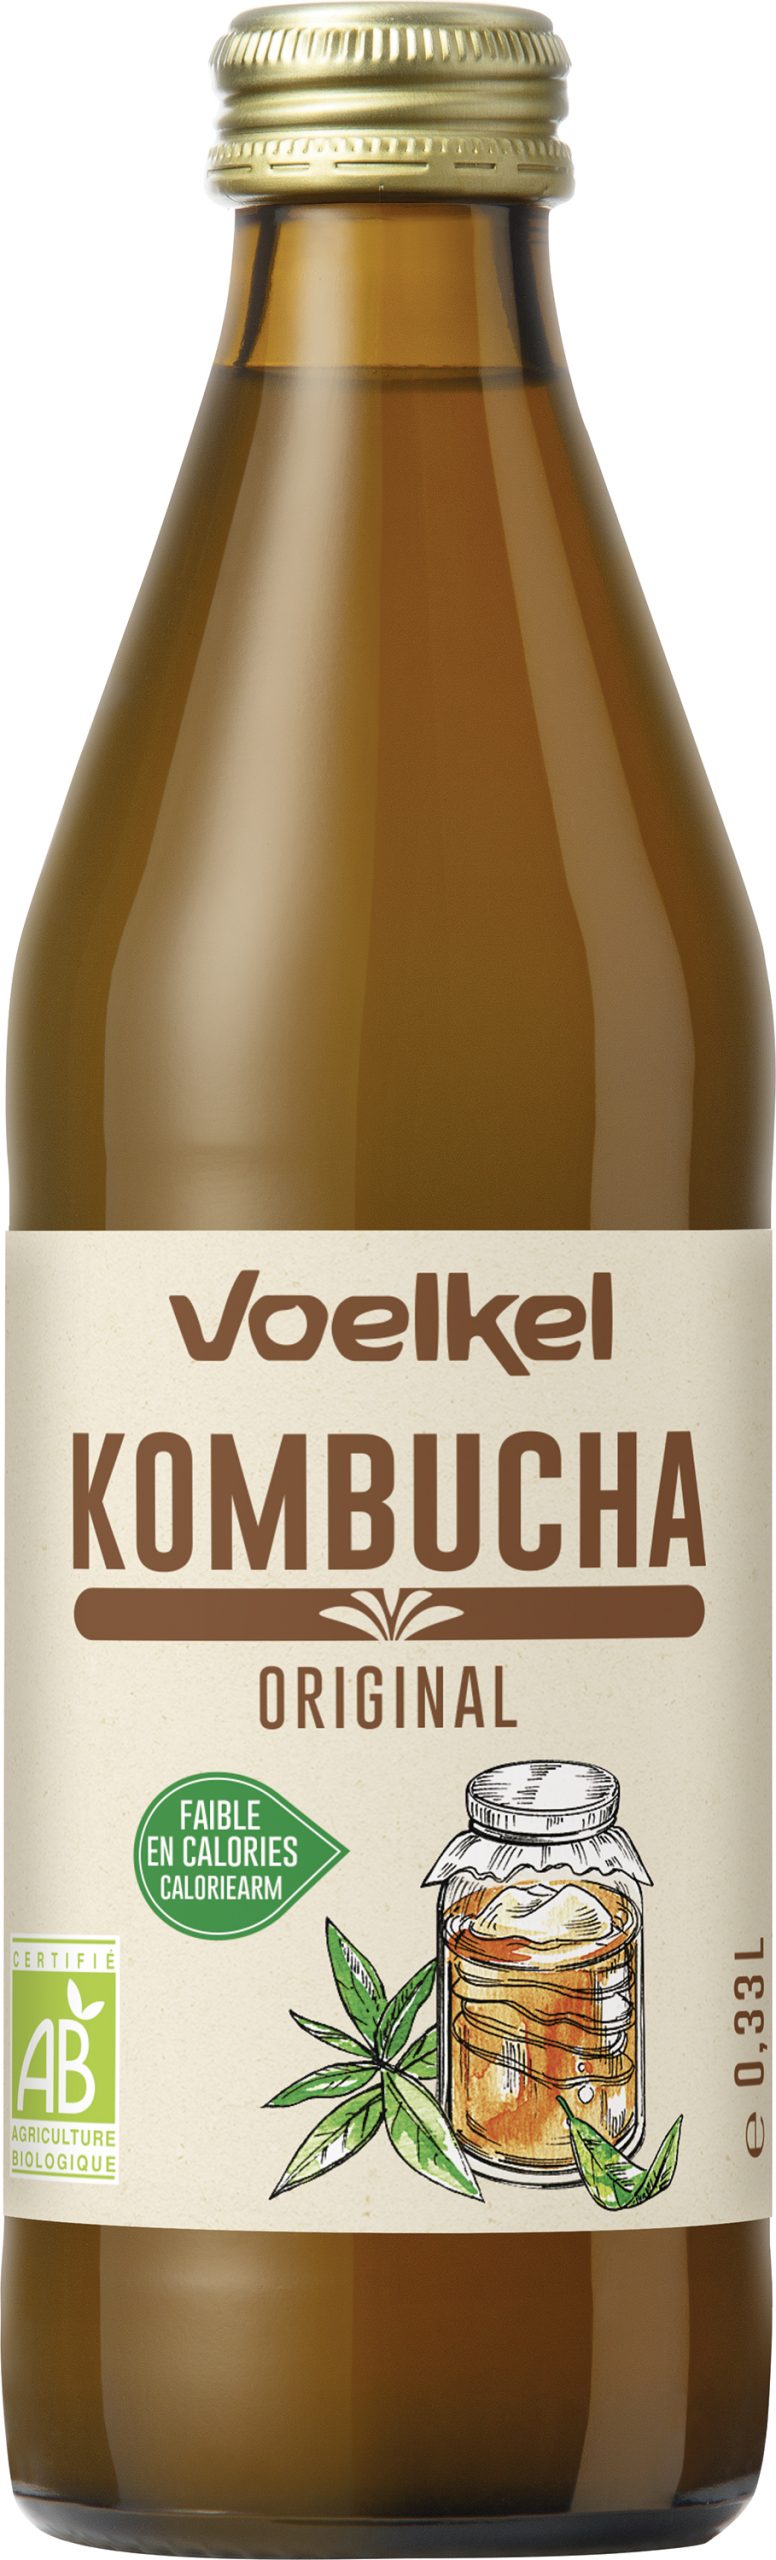 Voelkel Kombucha Original 33Cl – Green Village Maroc